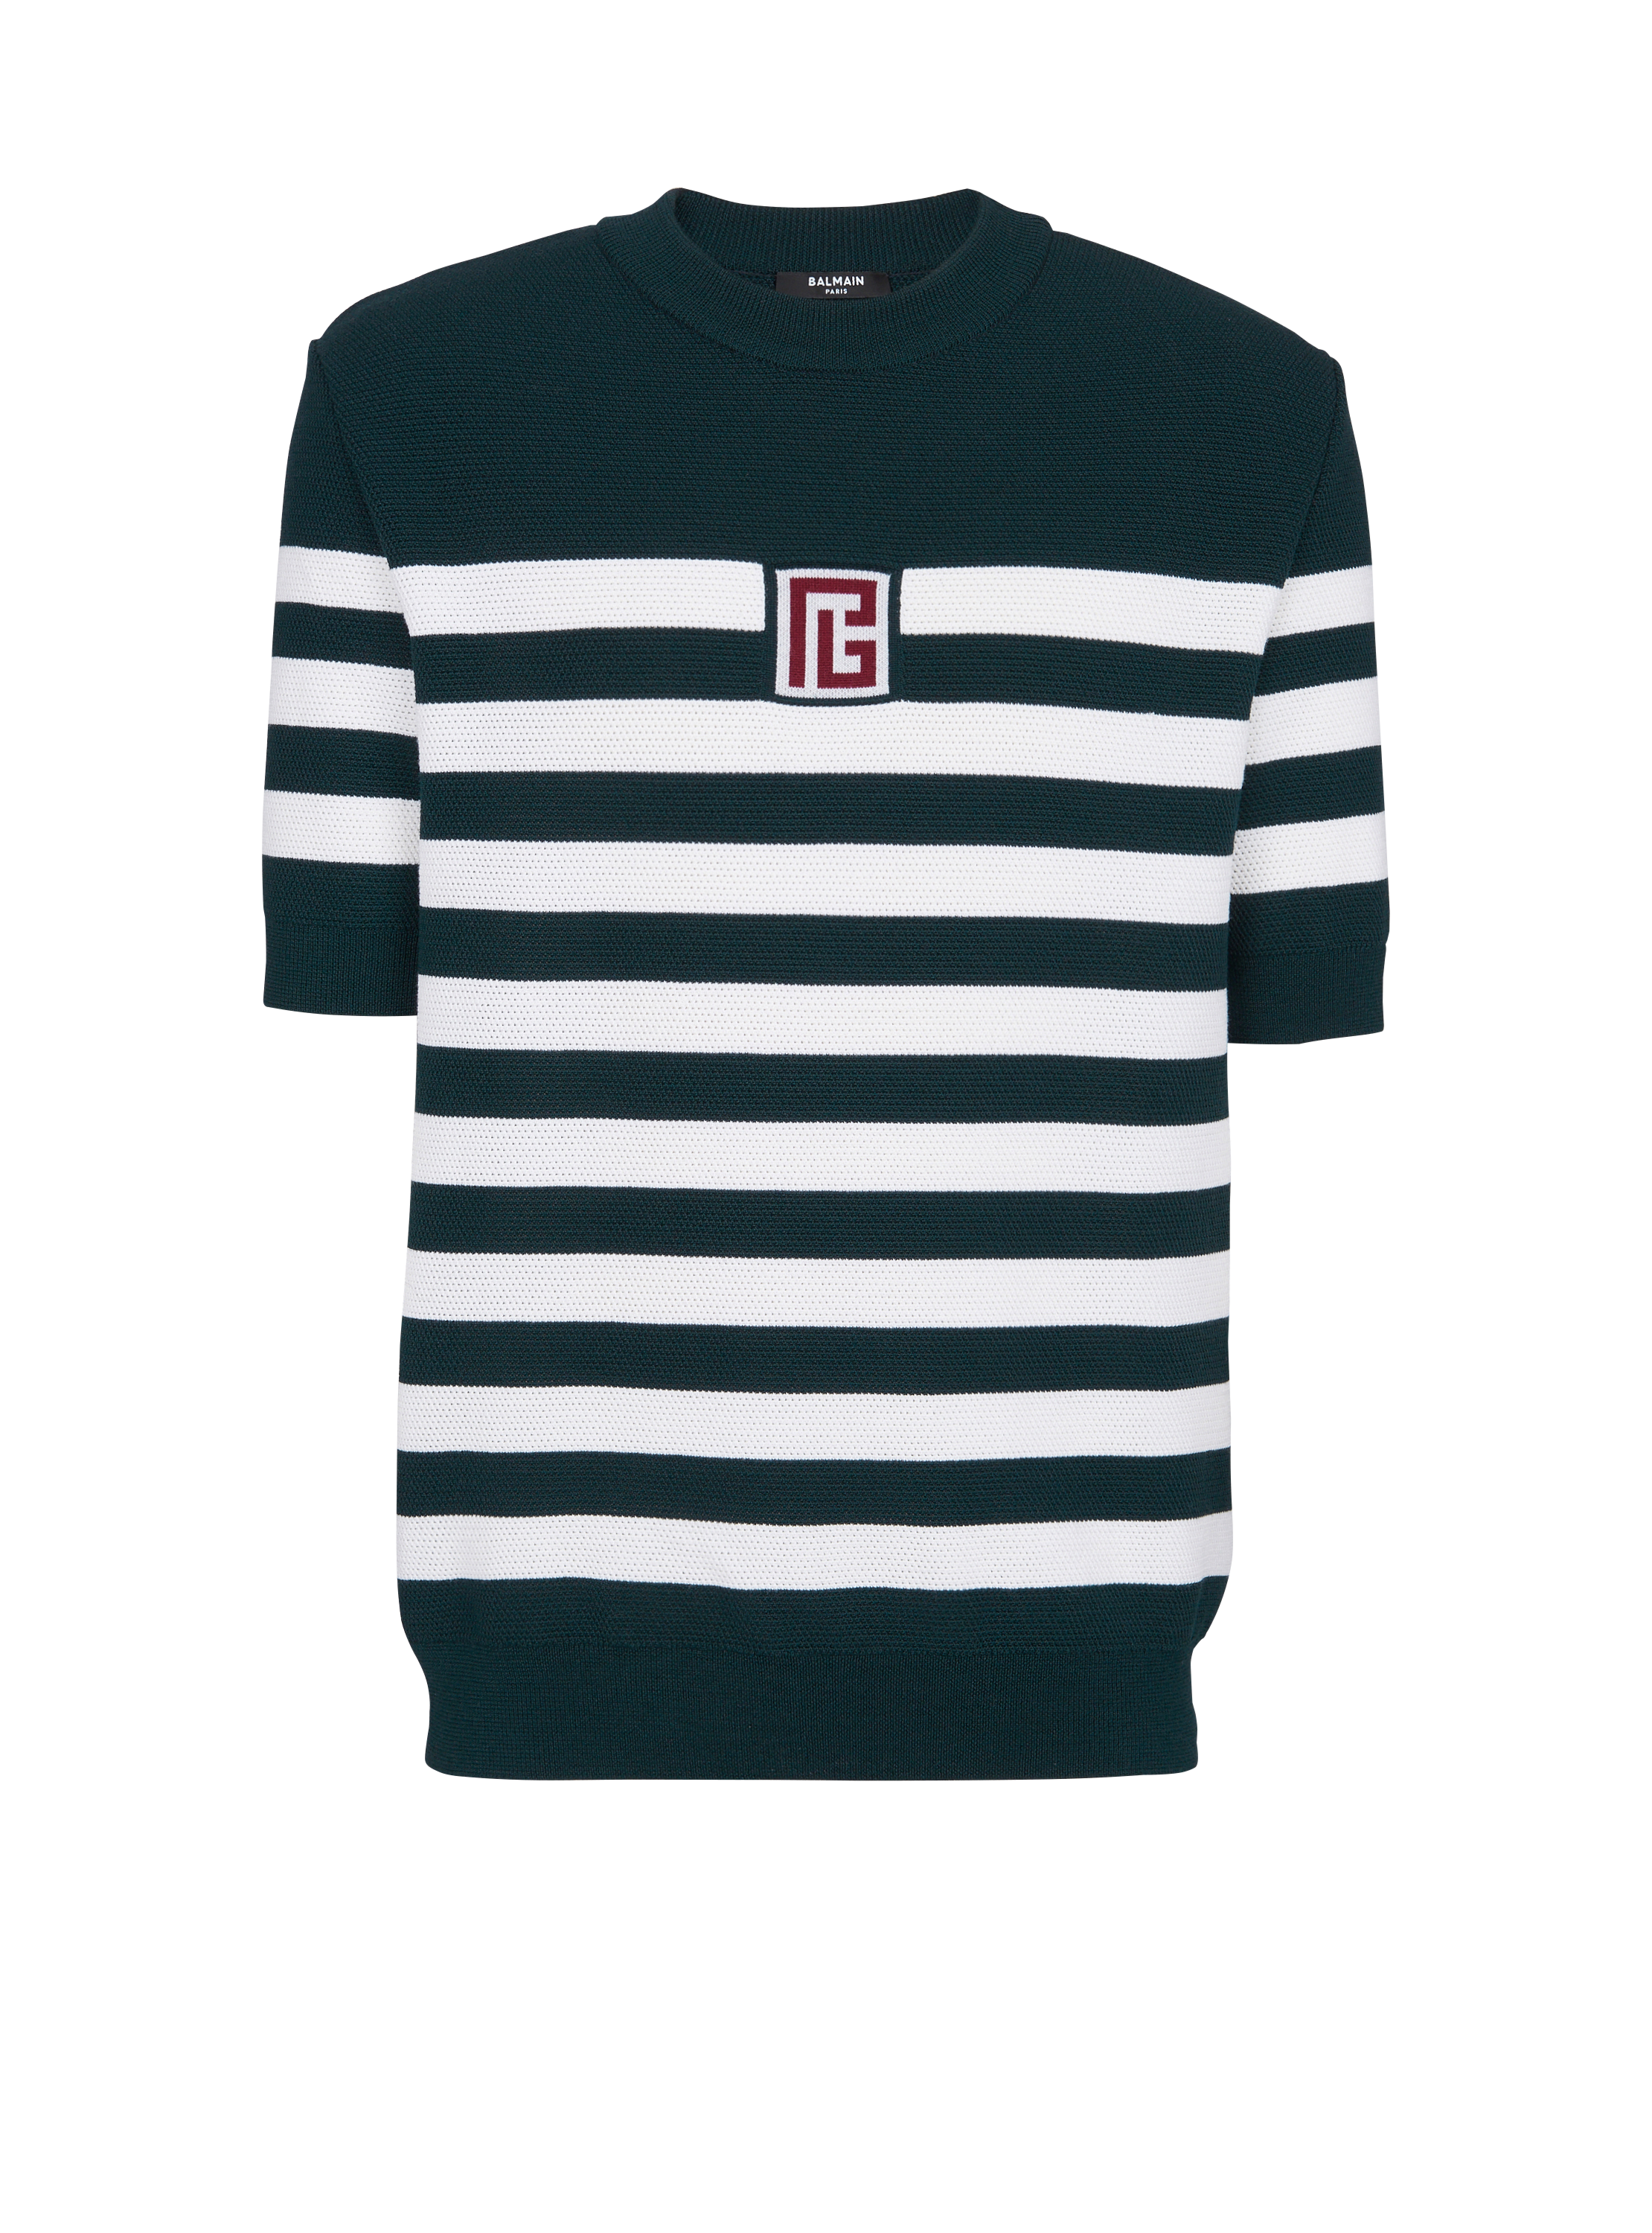 PB striped T-shirt